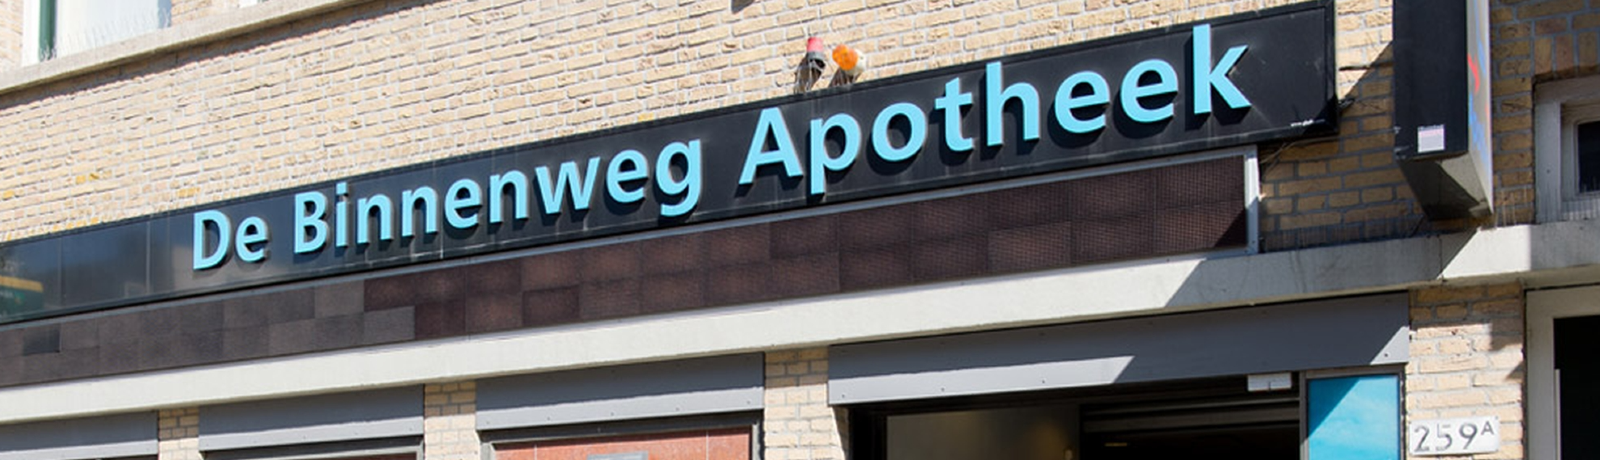 Service Apotheek De Binnenweg & Hoogeterp